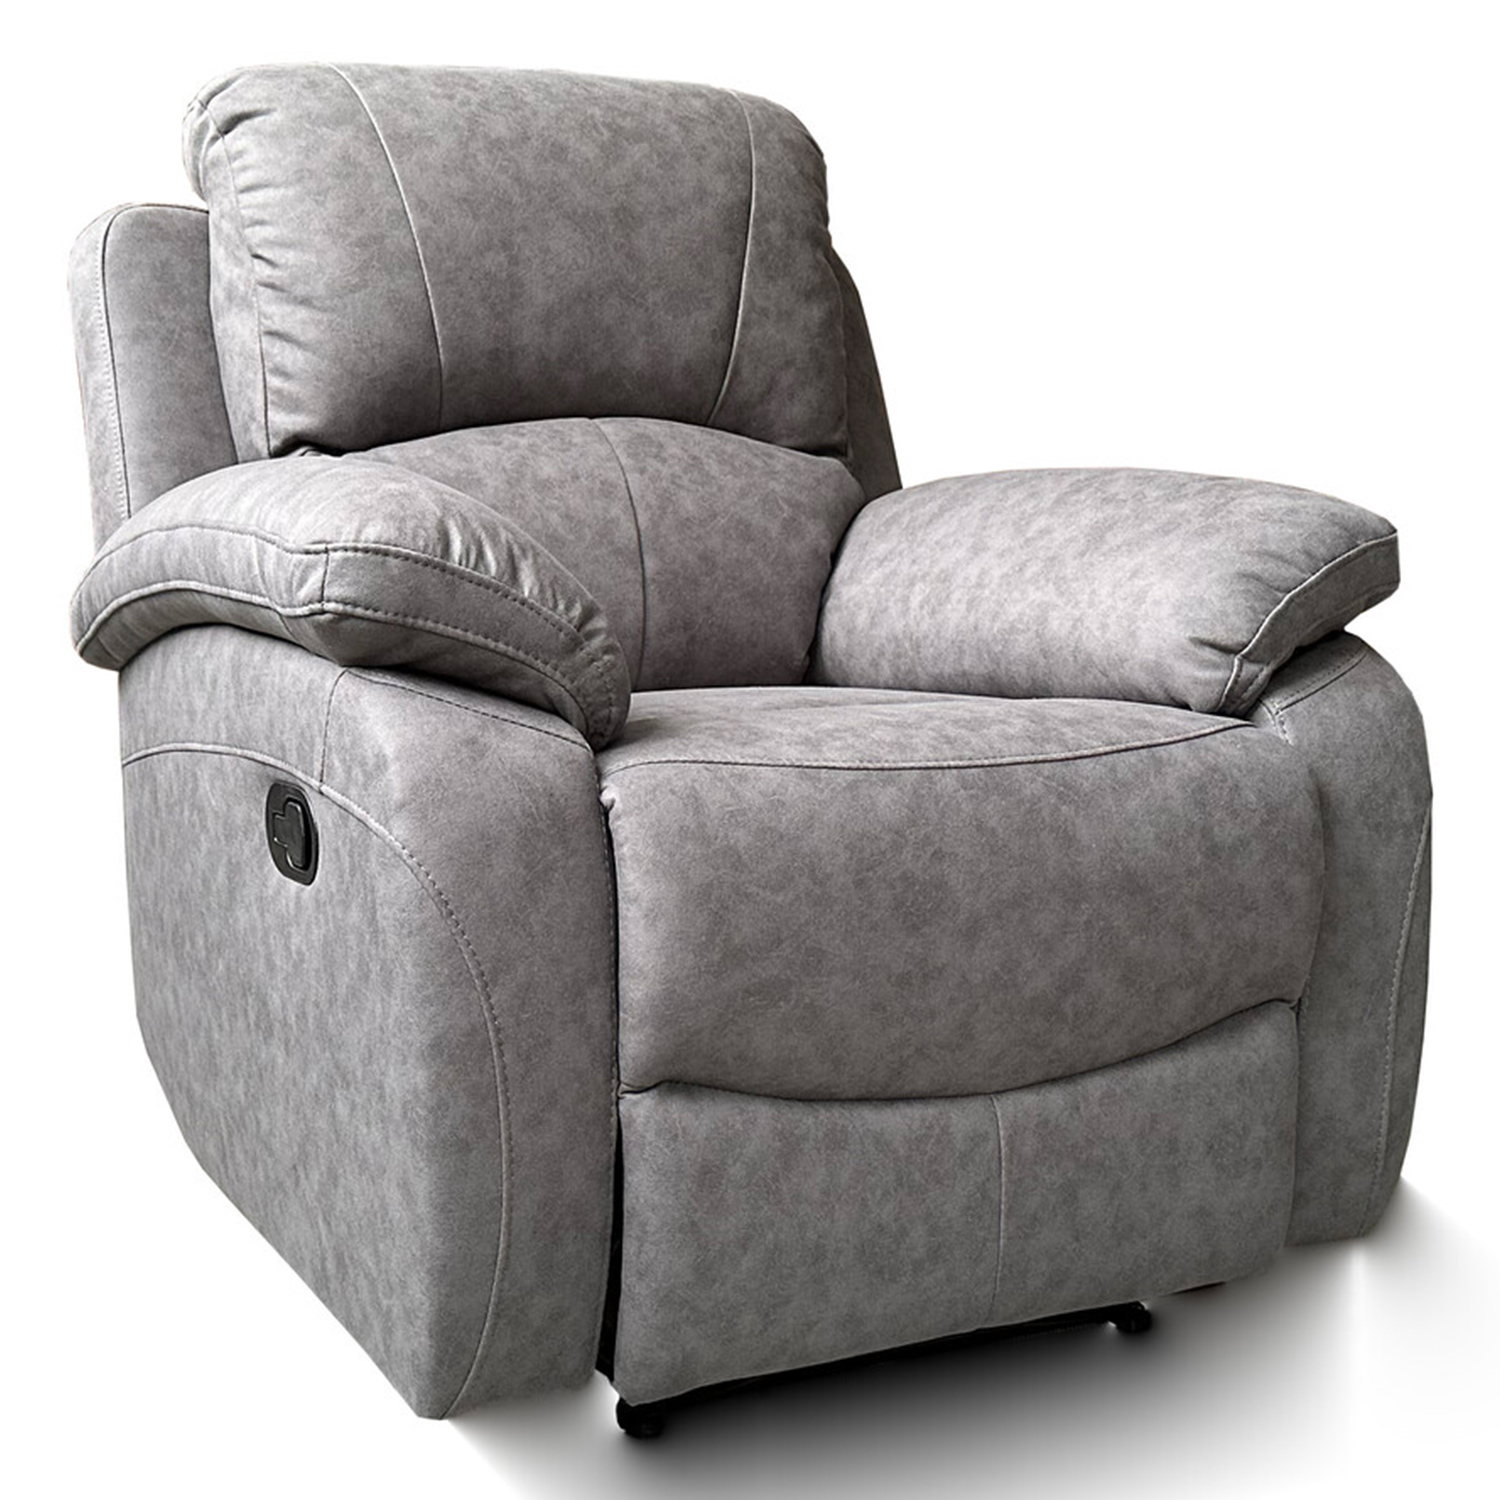 Milano Charcoal Grey Fabric Manual Recliner Chair Image 3